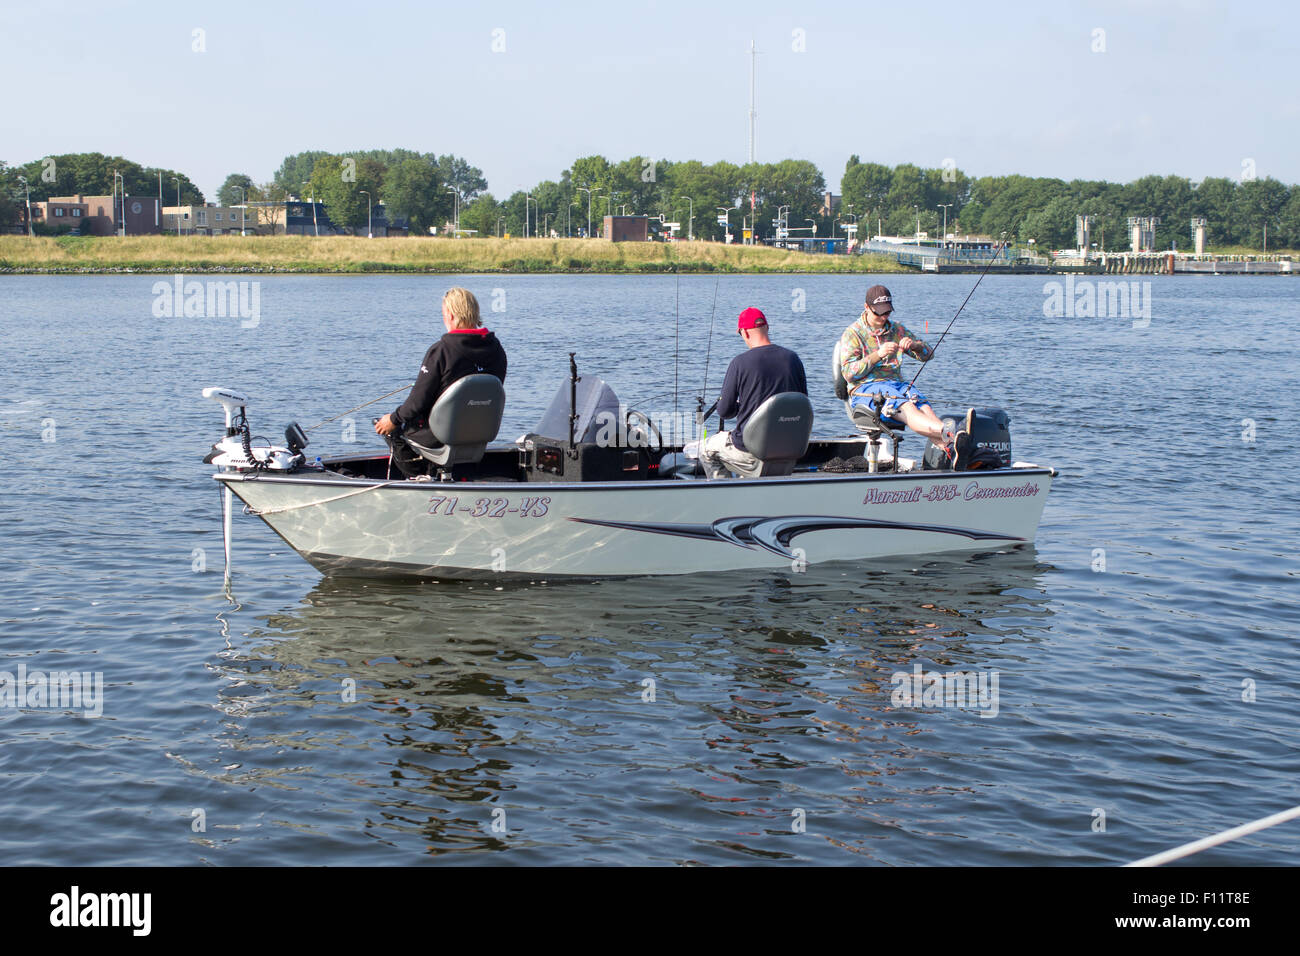 https://c8.alamy.com/comp/F11T8E/three-men-in-a-boat-fishing-F11T8E.jpg